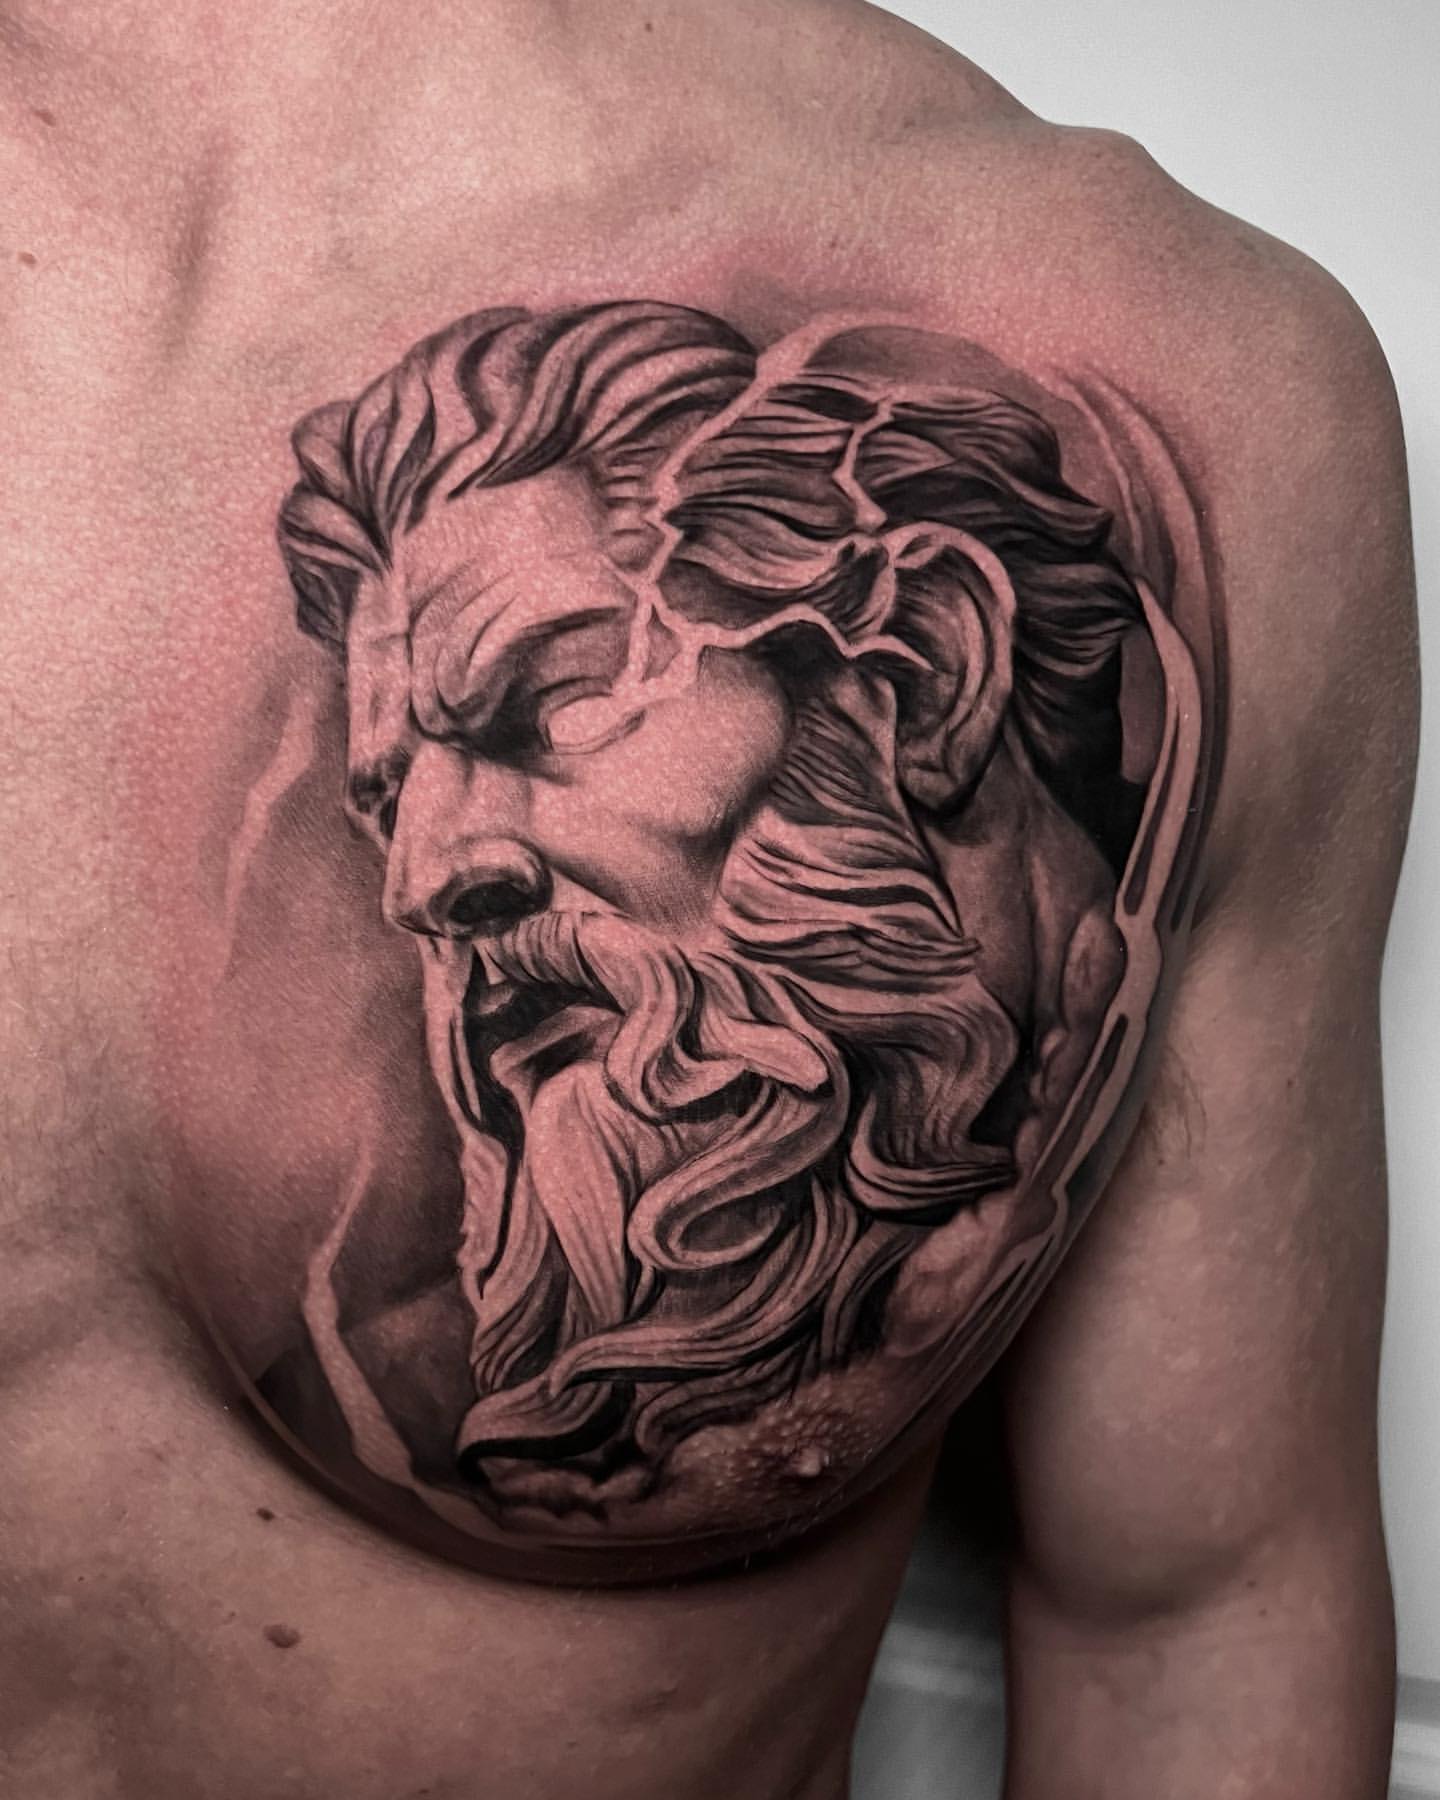 Tattoo uploaded by Zack Farley Tattoo • Zeus portrait • Tattoodo